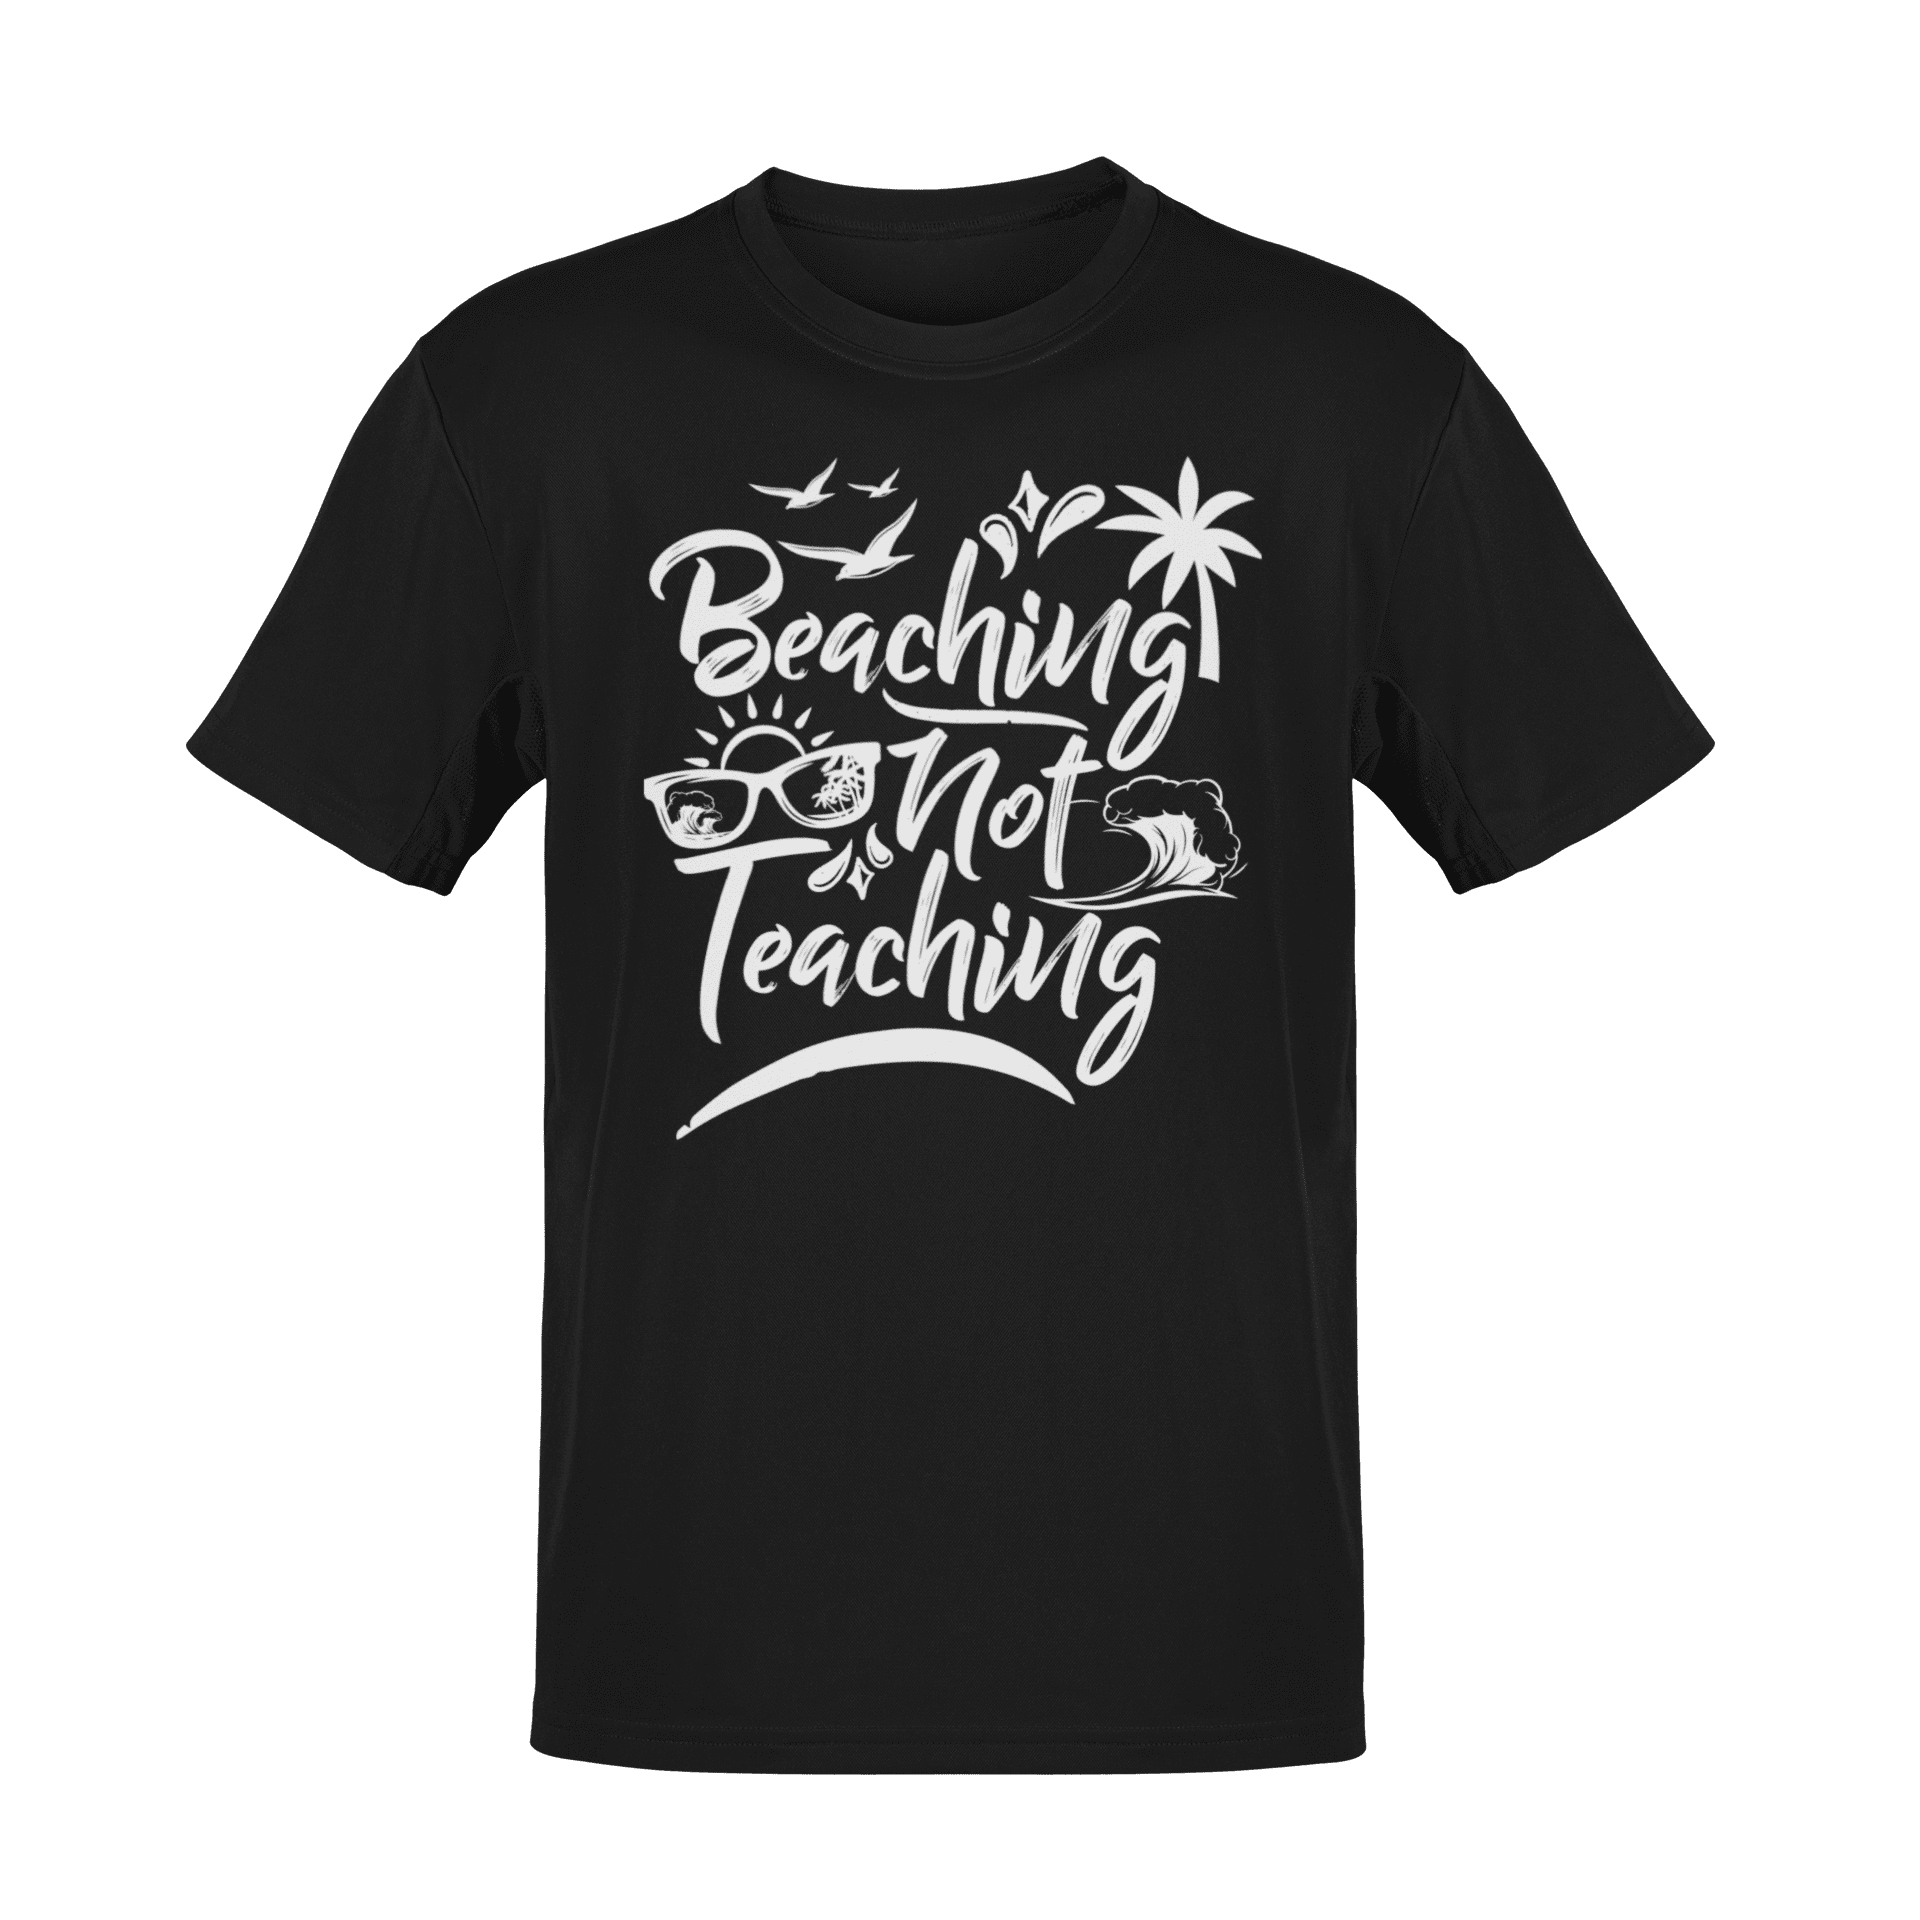 No teaching